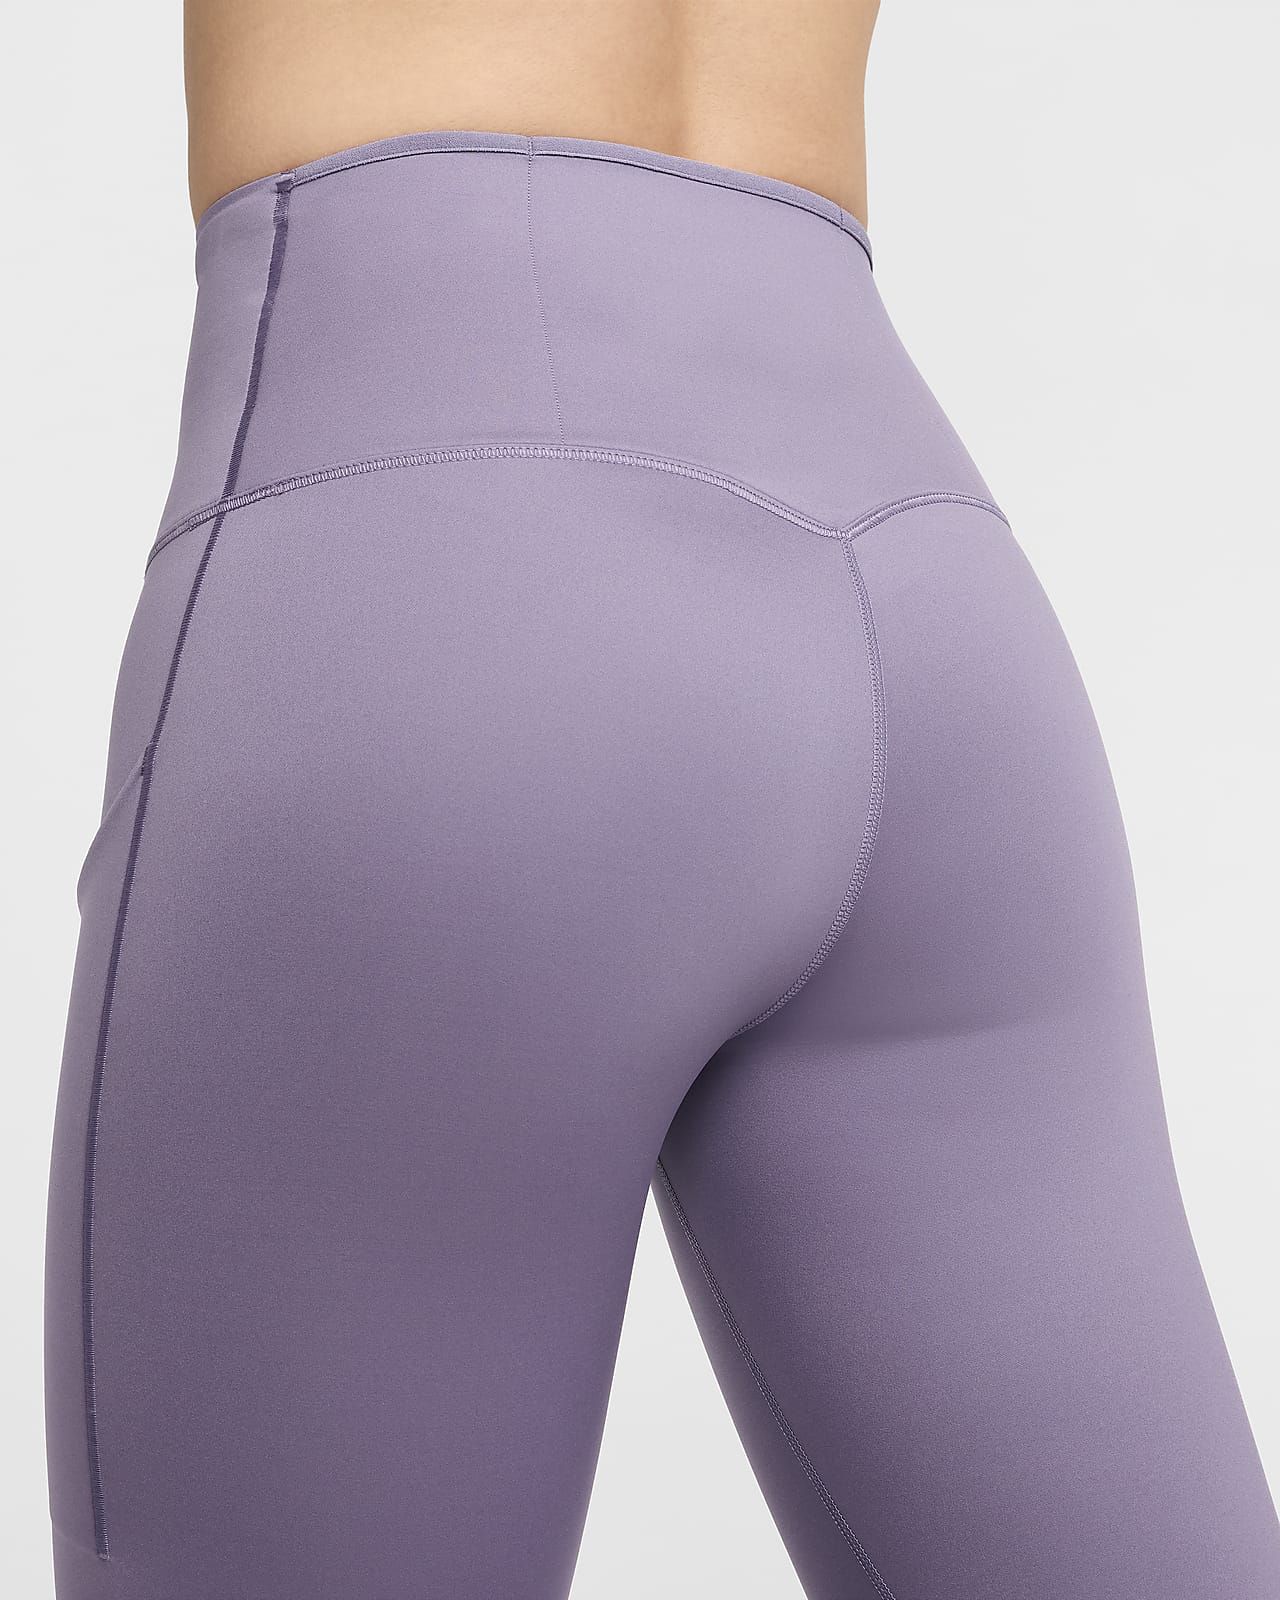 Nike Women's Yoga Cargo Khaki (Olive) 7/8 Legging (DJ0801-325